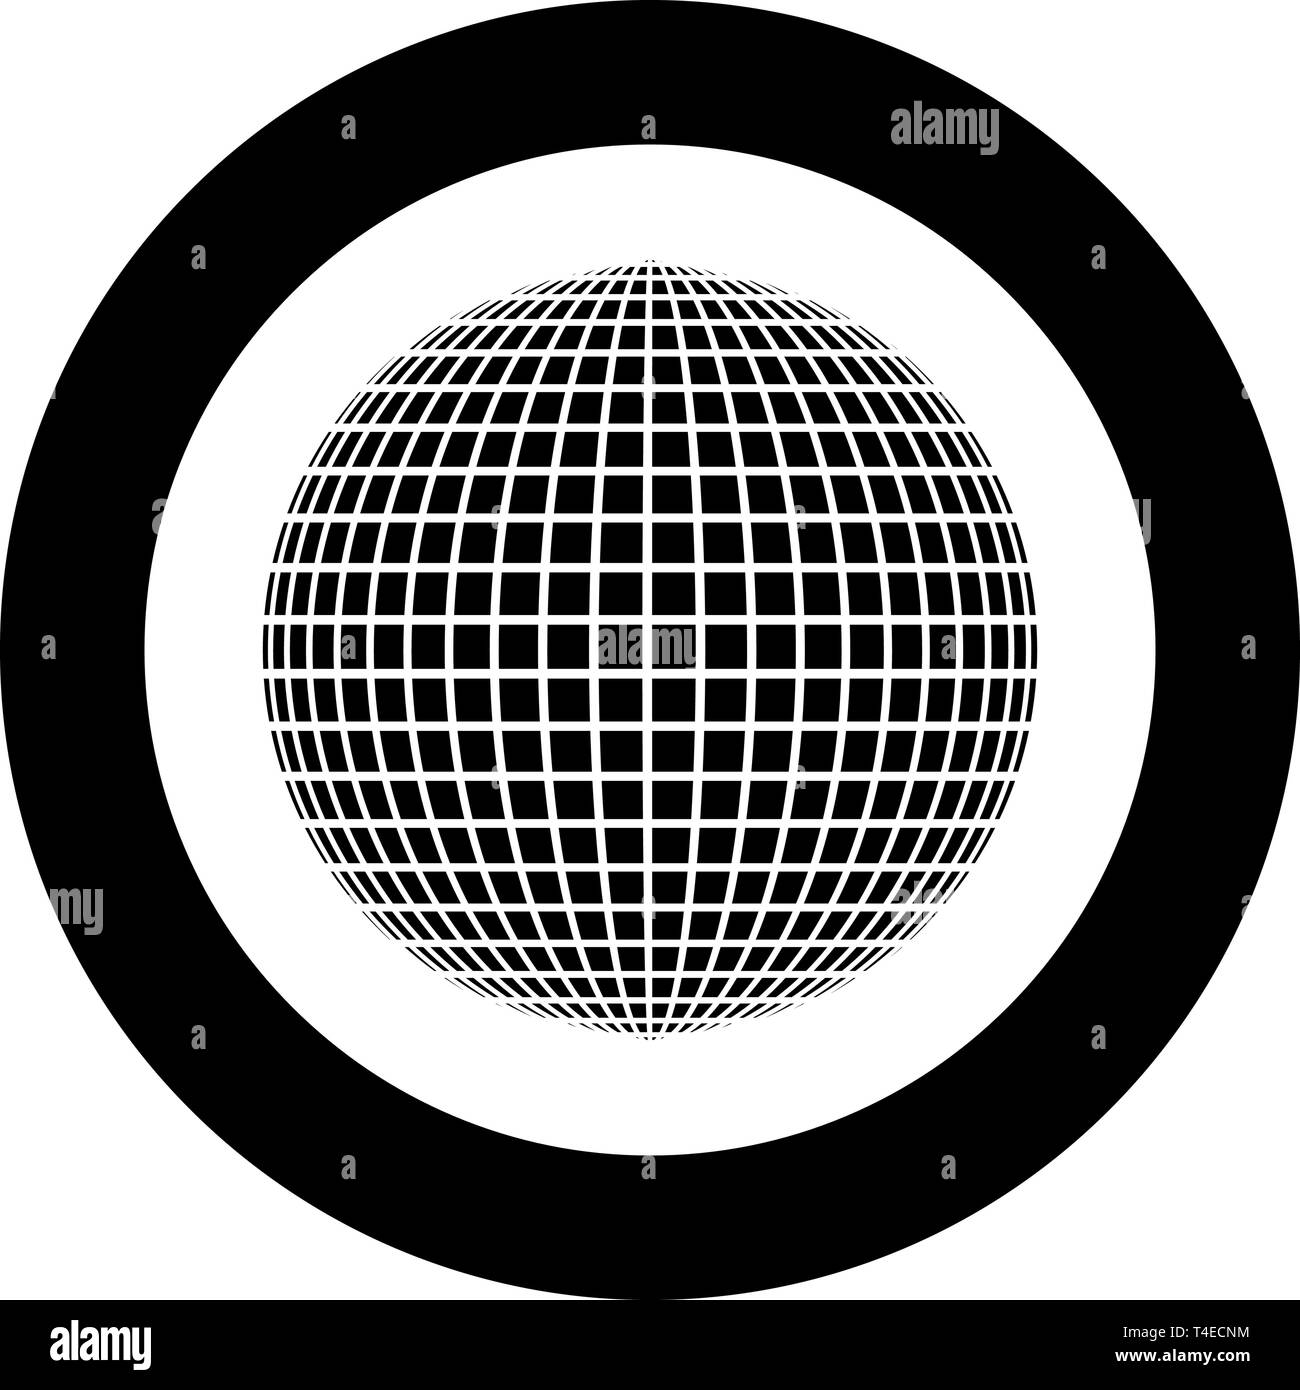 Disco ball Disco Party Konzept Ball Welt Konzept Web Idee Symbol im Kreis runden schwarzen Farbe Vektor-illustration Flat Style simple Image Stock Vektor